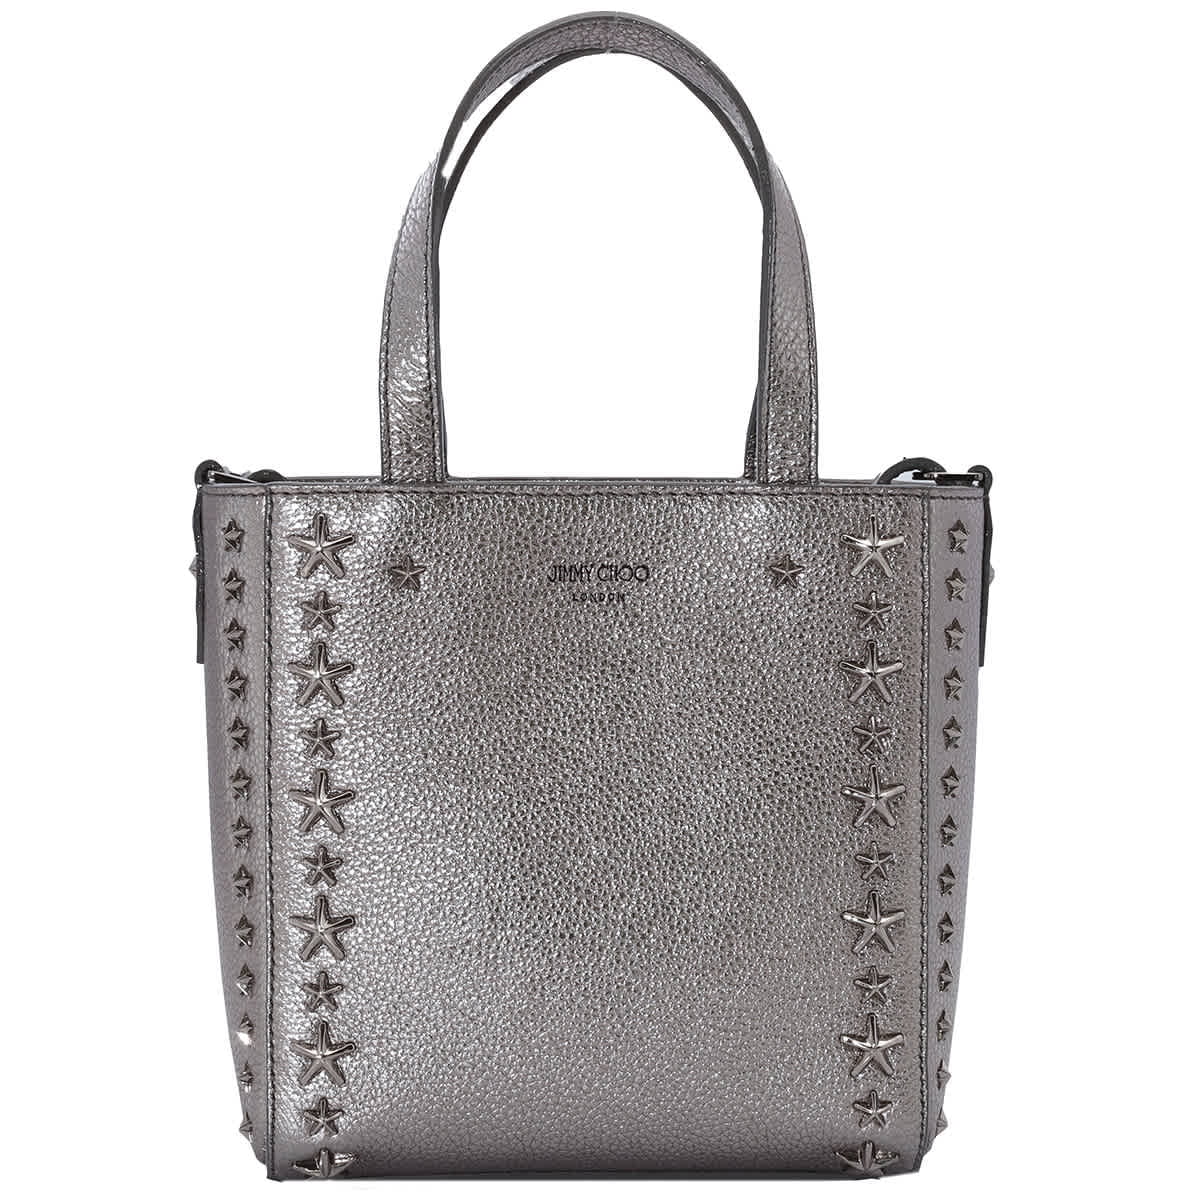 Jimmy Choo Patent Leather Handbags | Mercari